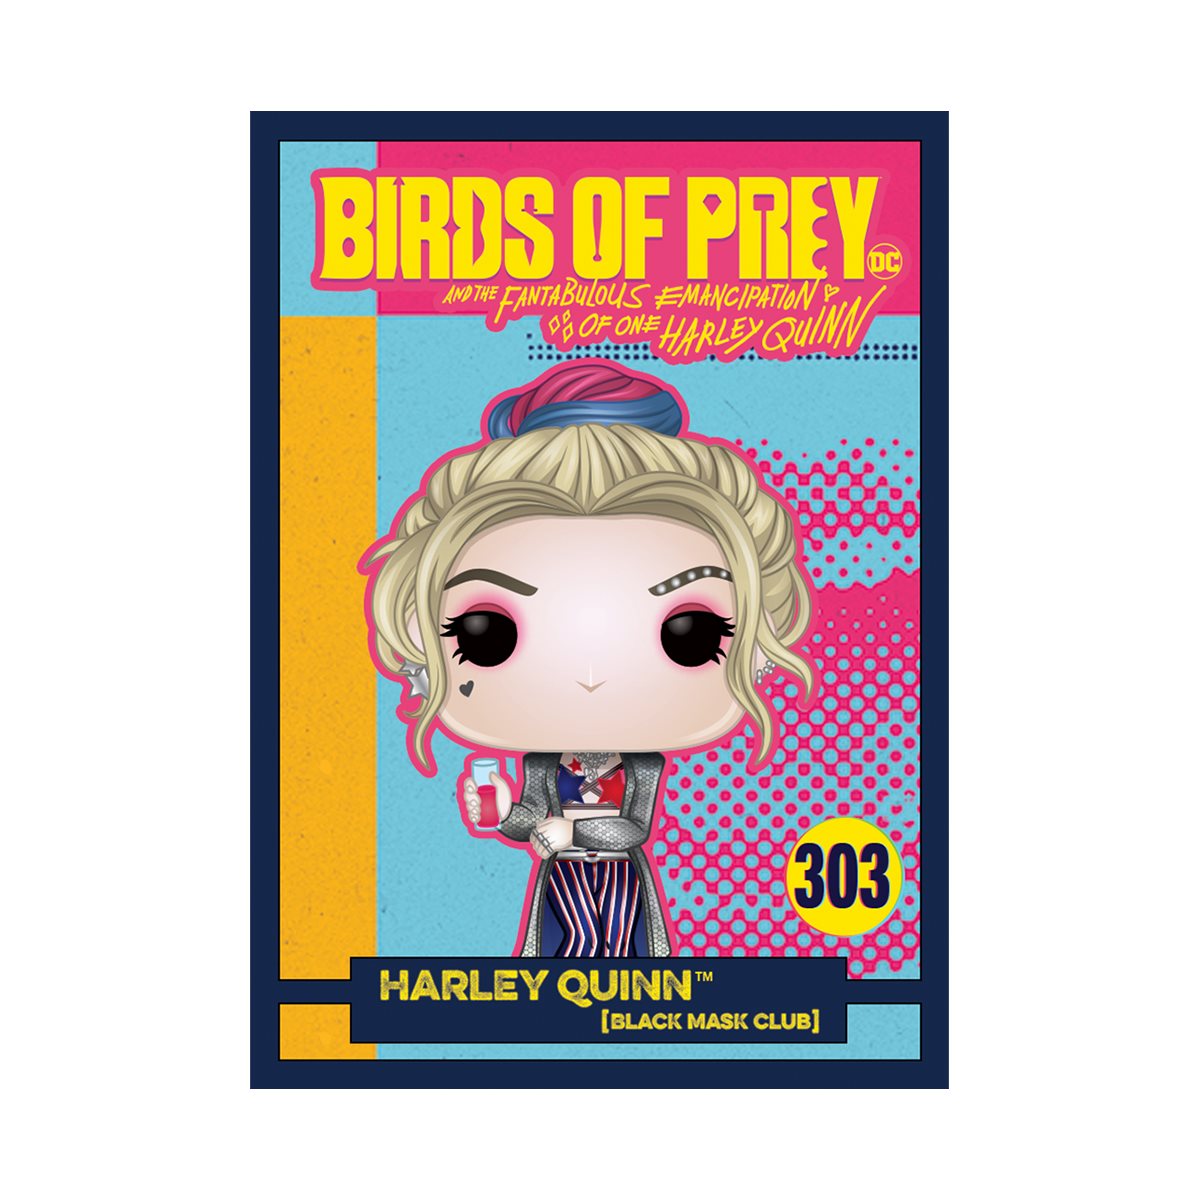 Birds of Prey Harley Quinn Black Mask Club Funko Pop! Vinyl Figure with